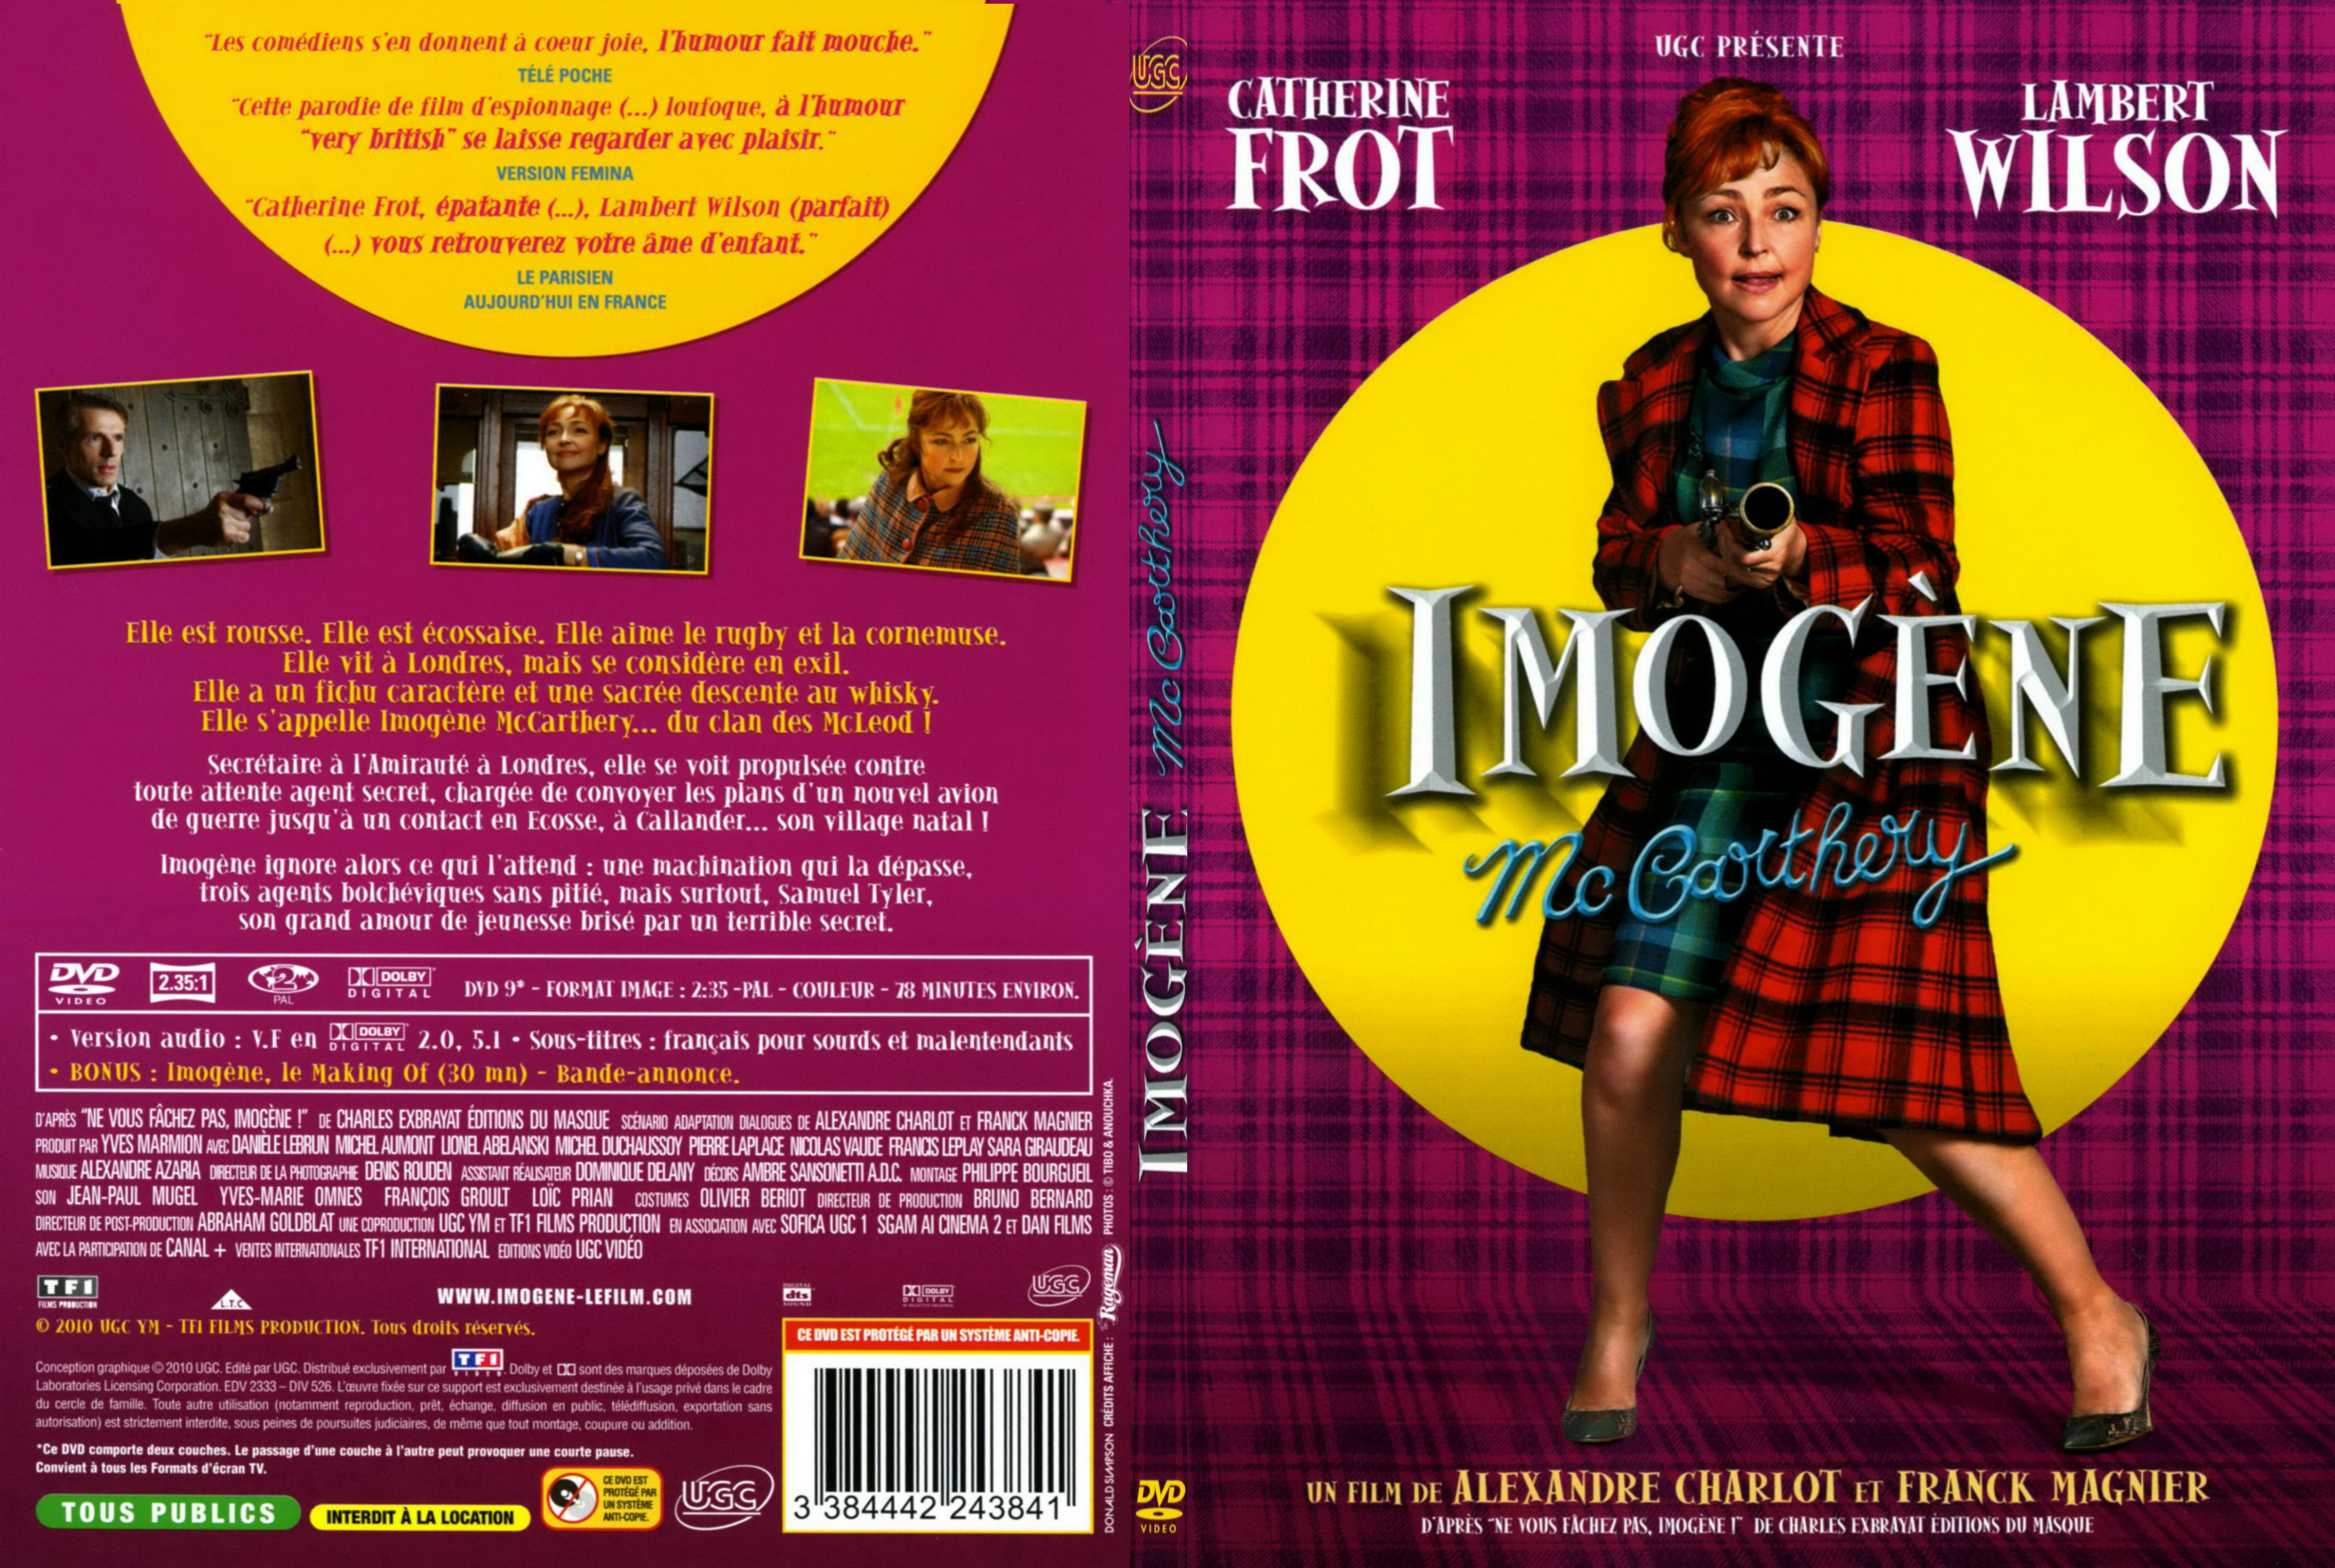 Jaquette DVD Imogene McCarthery - SLIM